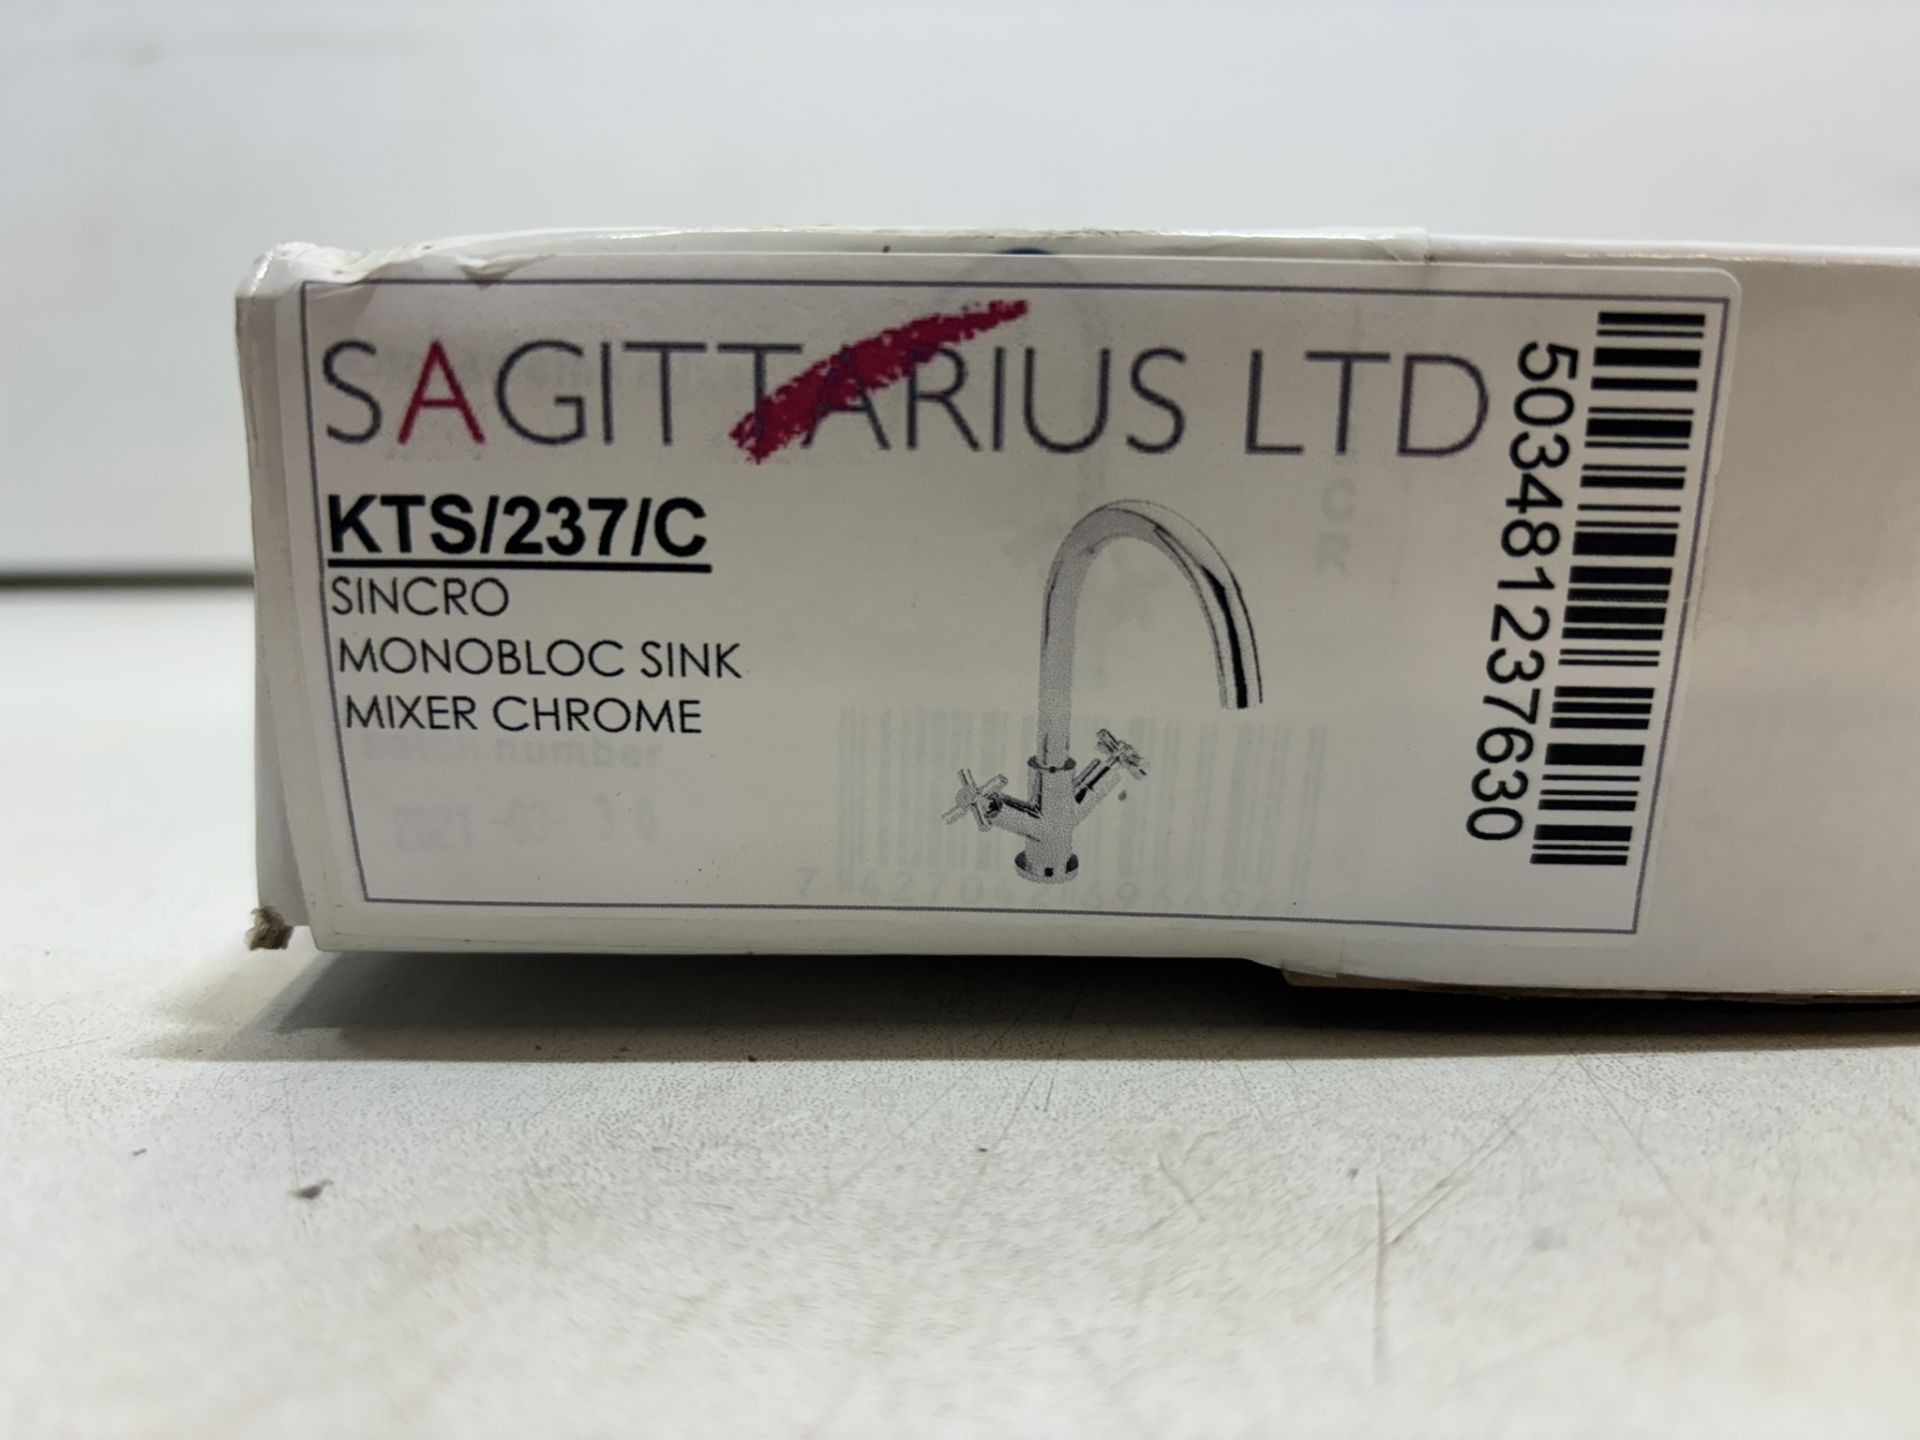 Sagittarius Ltd KTS/237/C Sincro Monobloc Sink Mixer Chrome - Bild 2 aus 4